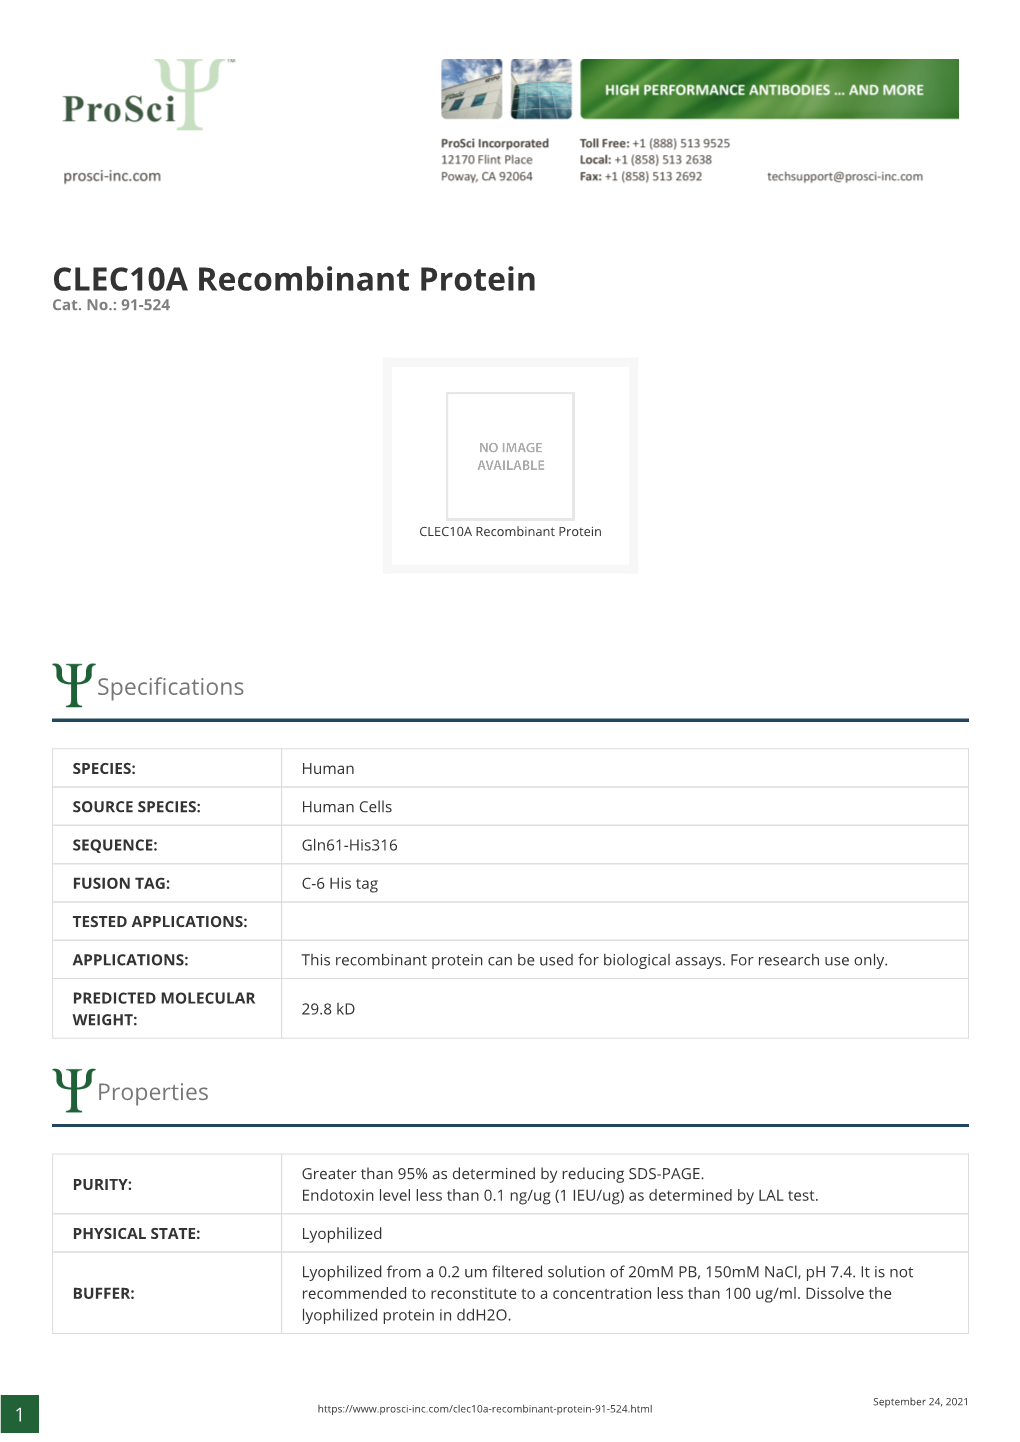 CLEC10A Recombinant Protein Cat